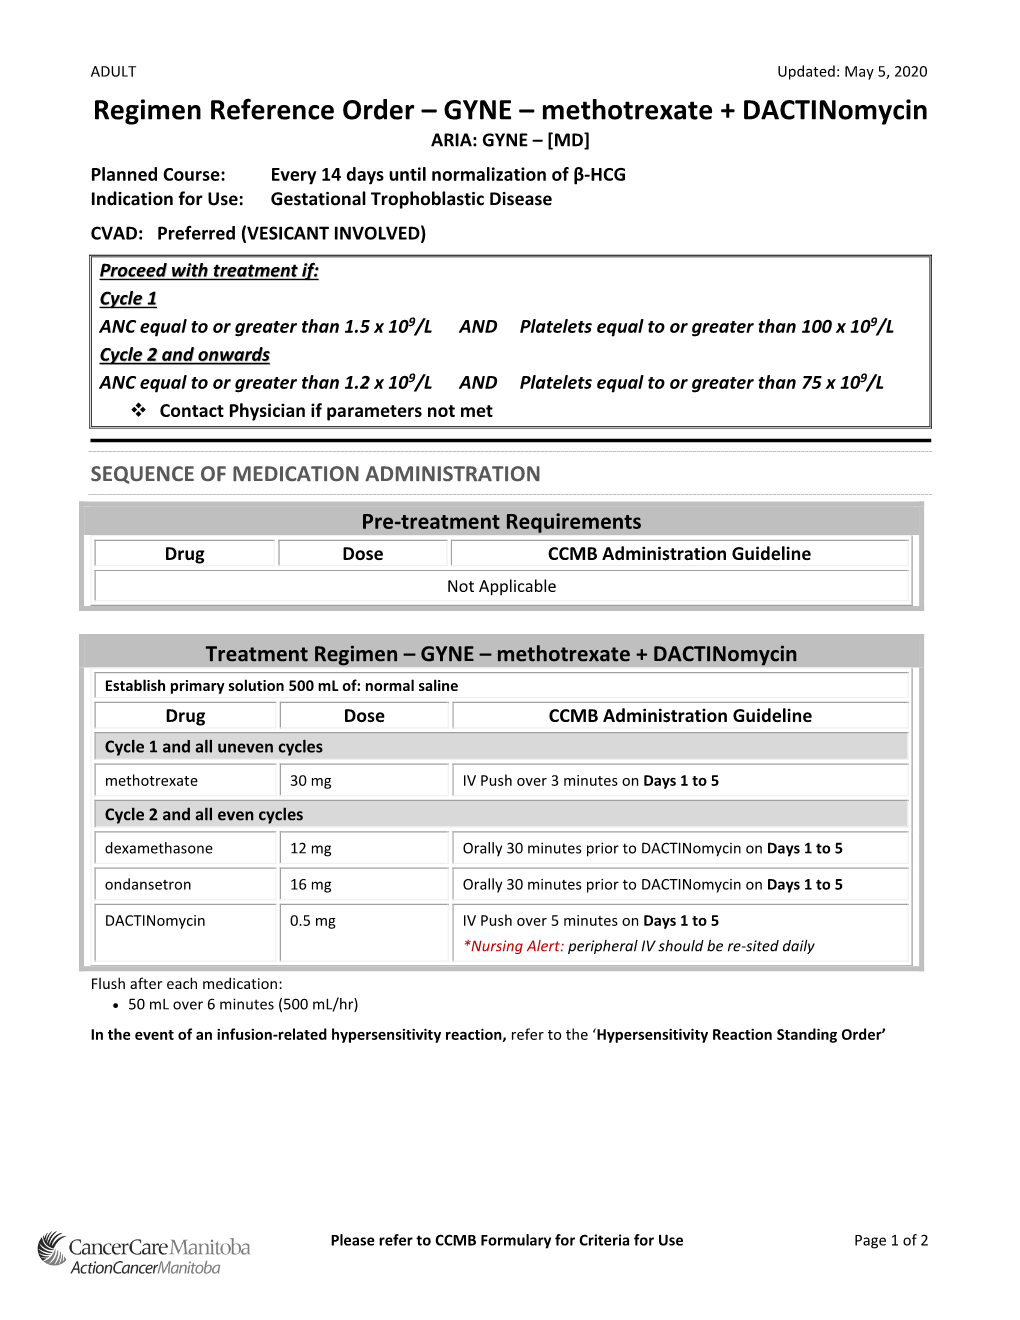 Regimen Reference Order – GYNE – Methotrexate + Dactinomycin